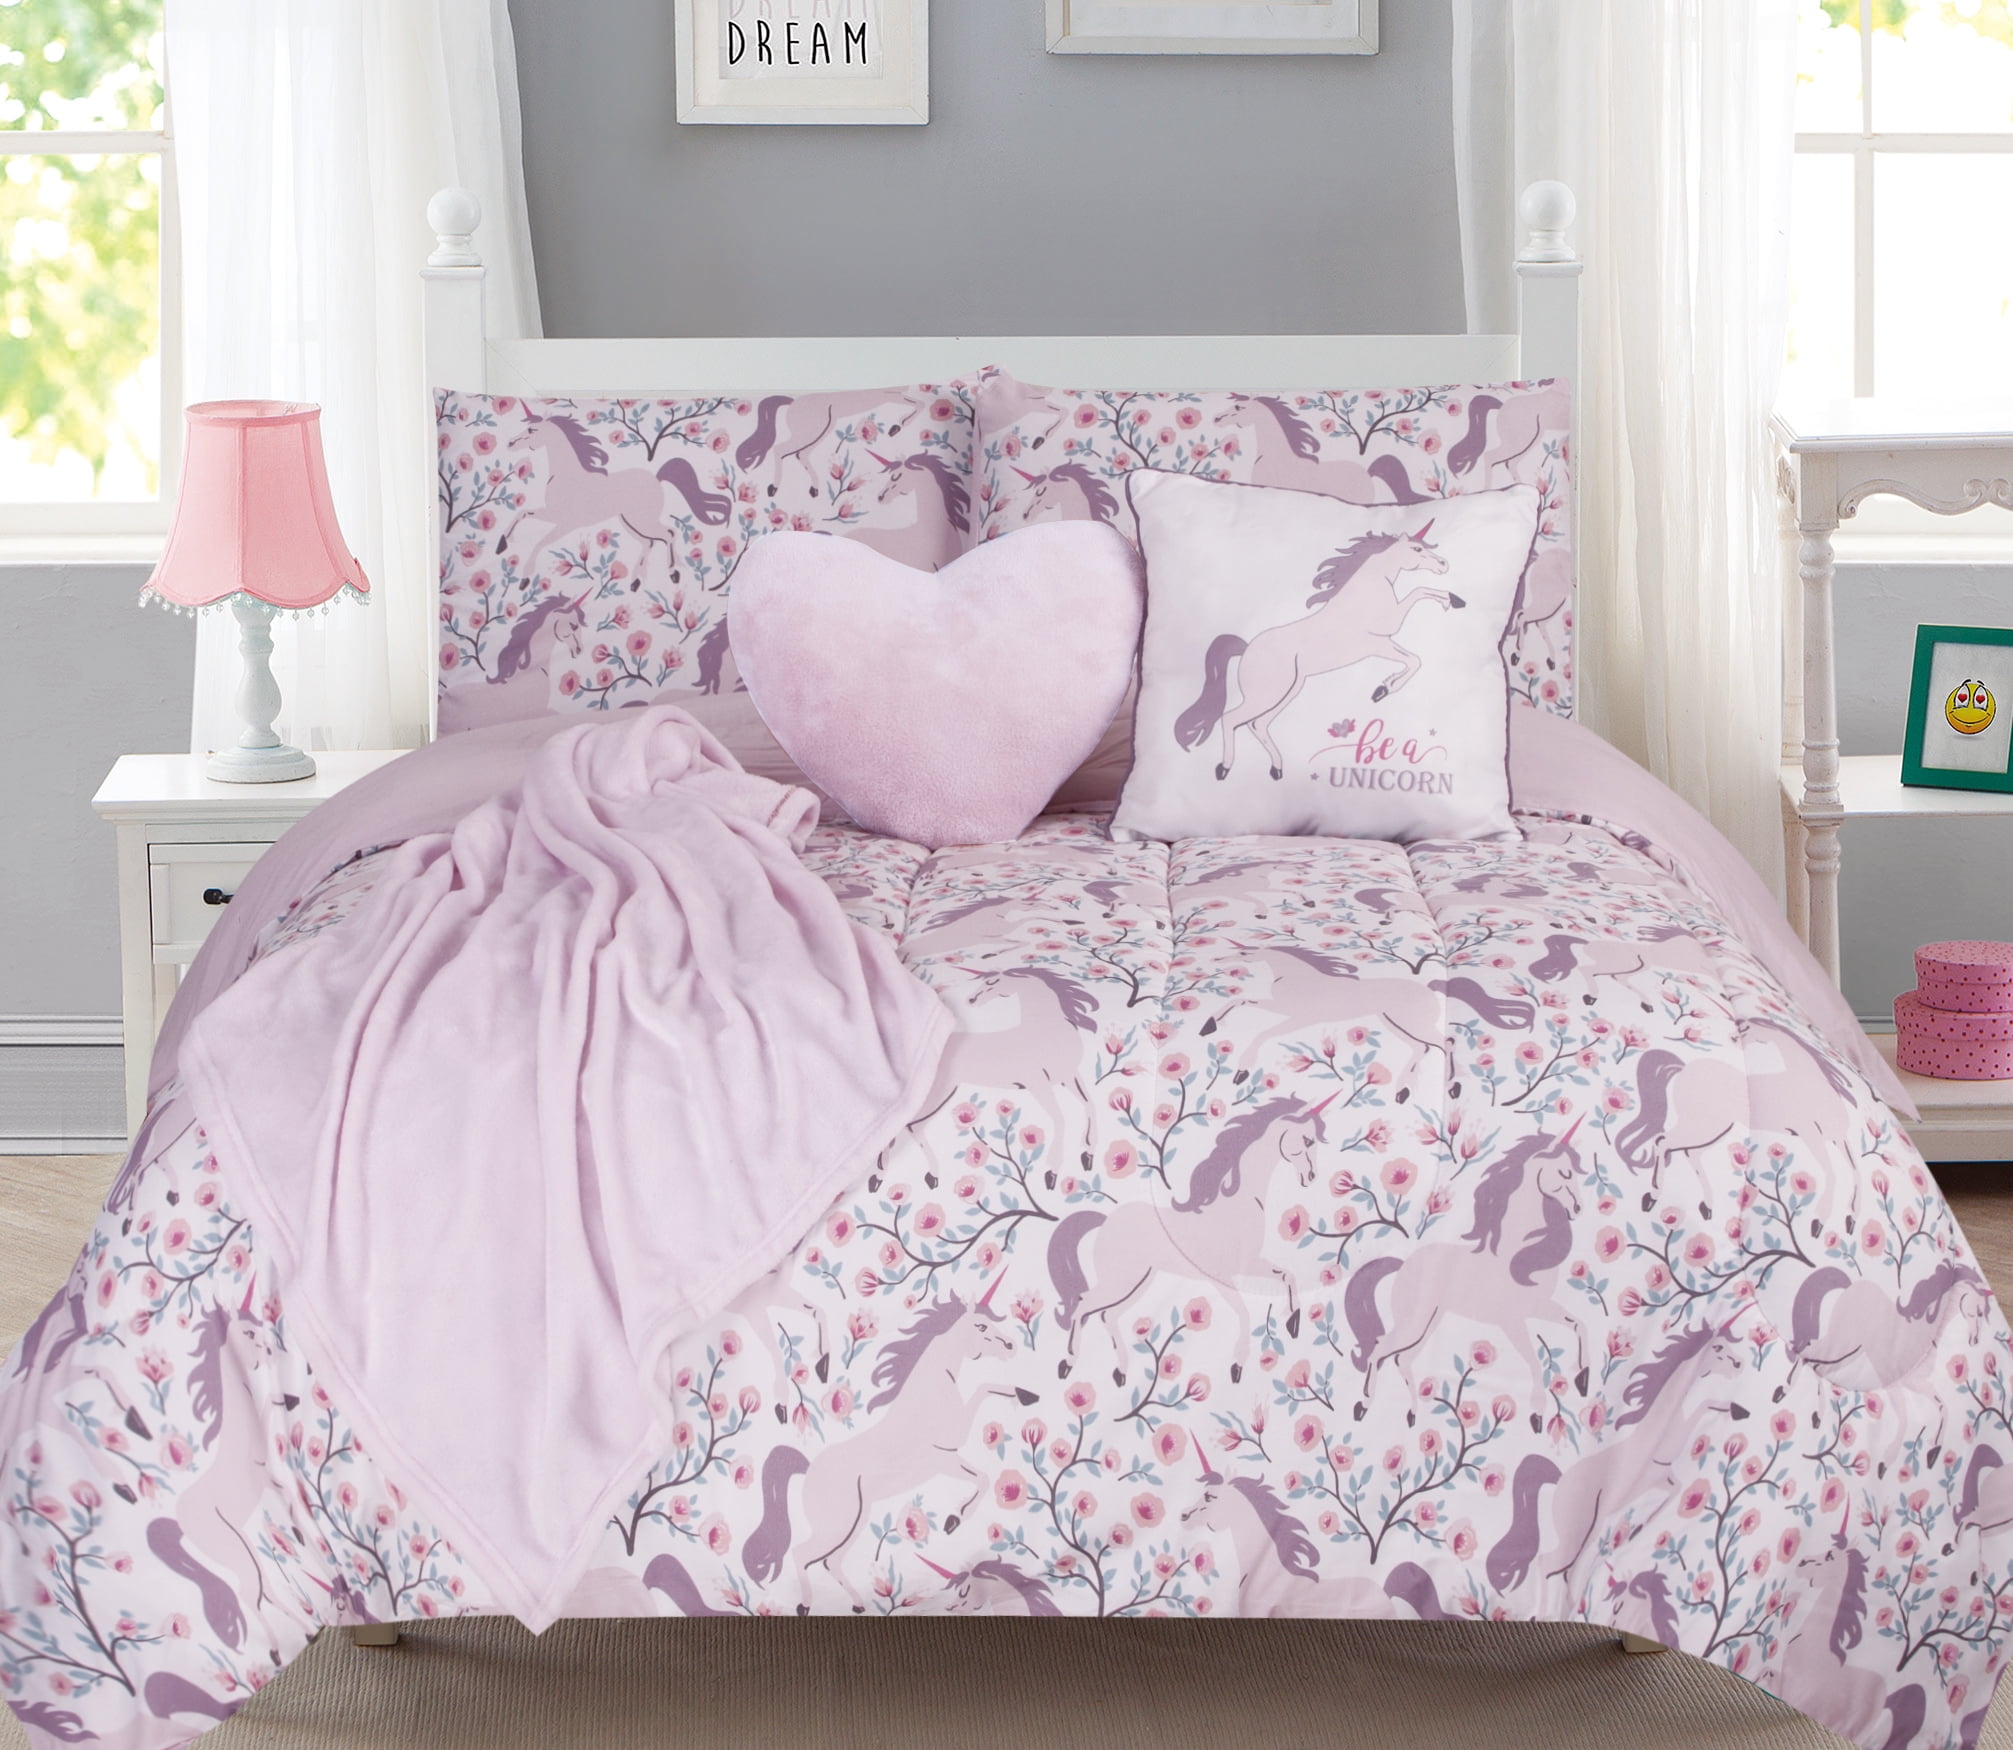 7 Piece Girl's Purple Full Size Comforter Set Reversible Bedspread Kids Bedding 